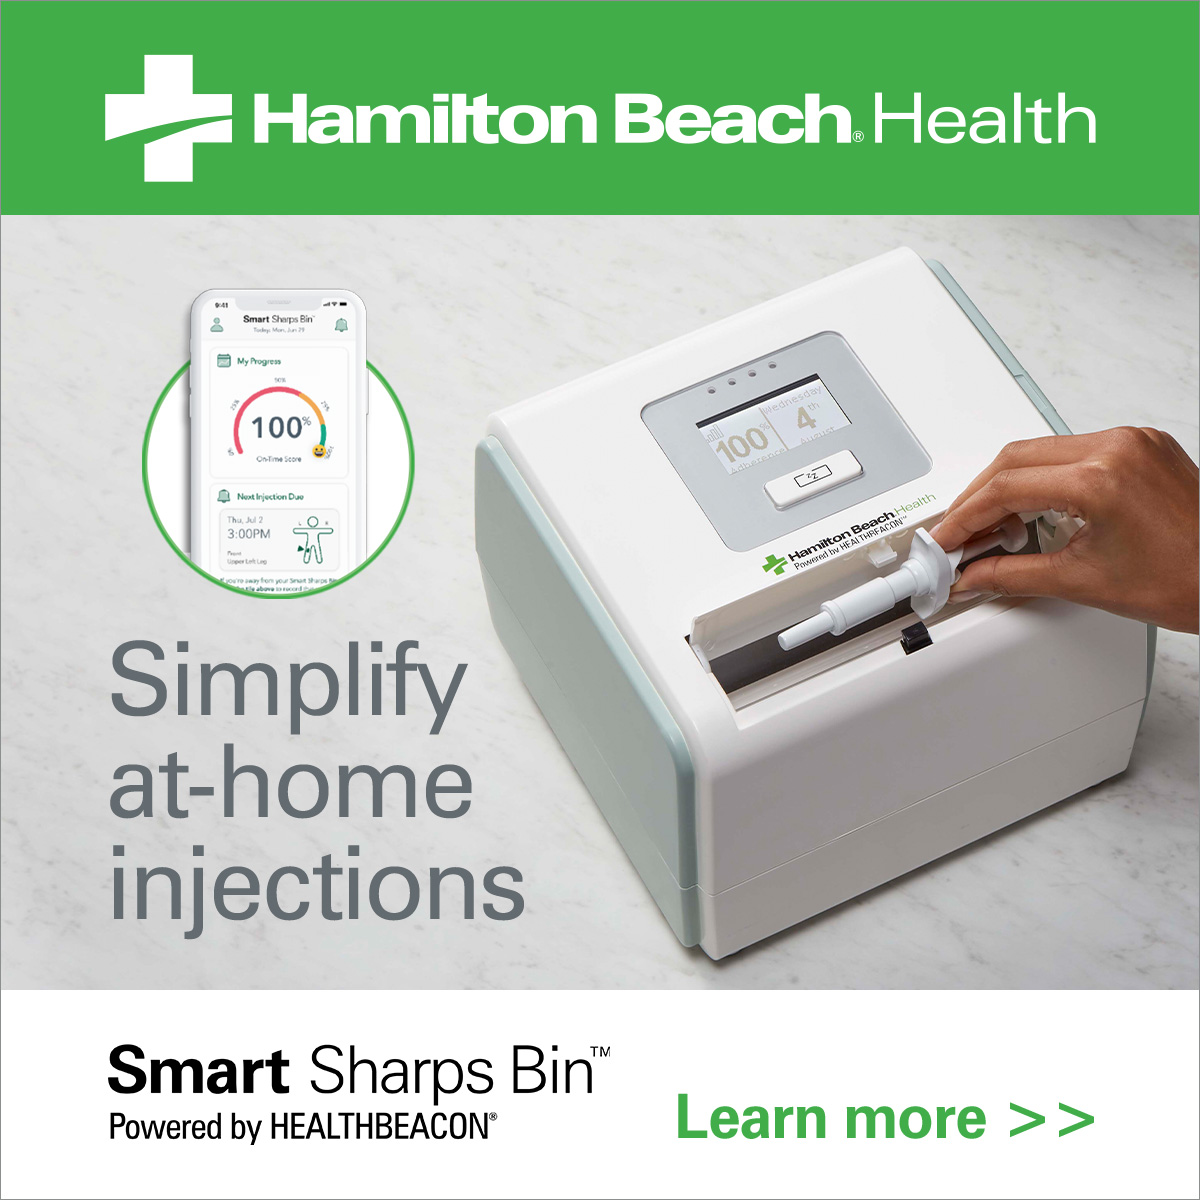 Hamilton Beach Health